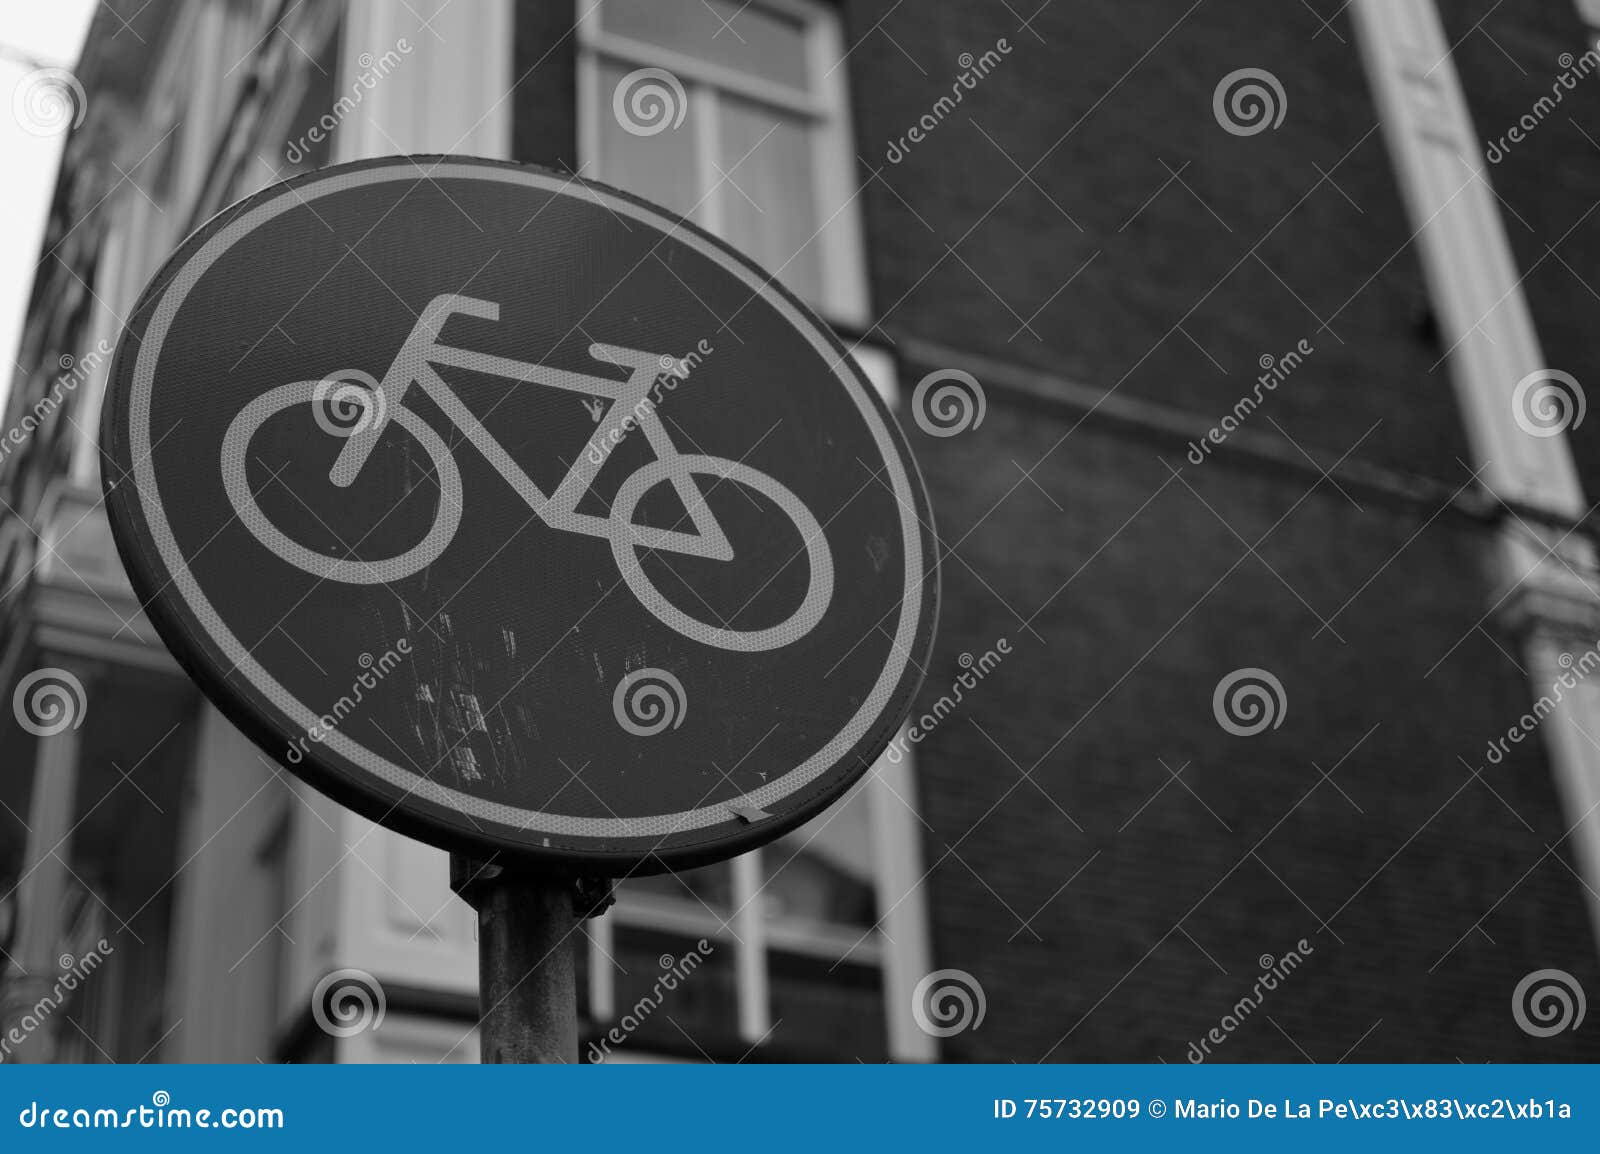 bike sign in amsterdam.